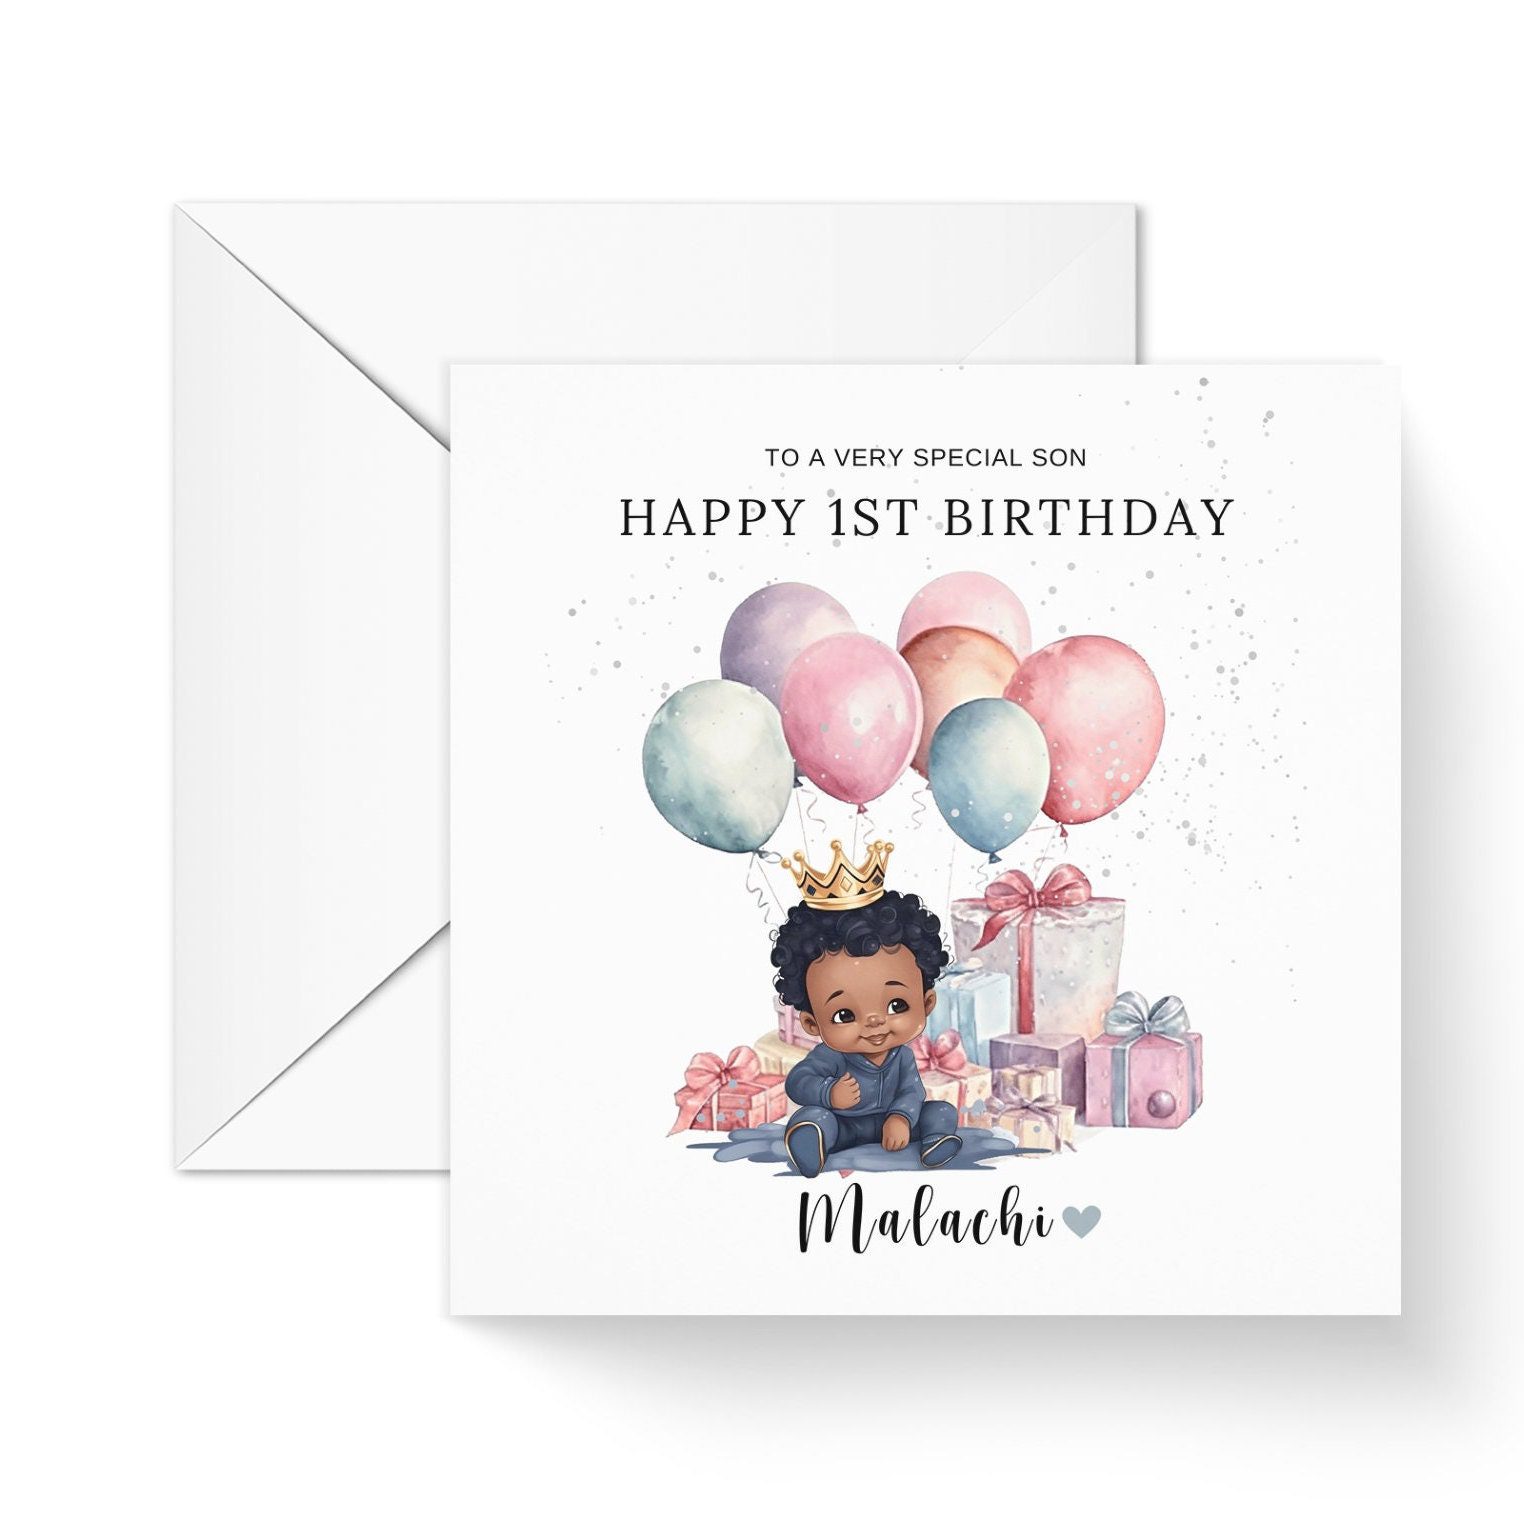 Happy 1st Birthday Black Greeting Card for kids